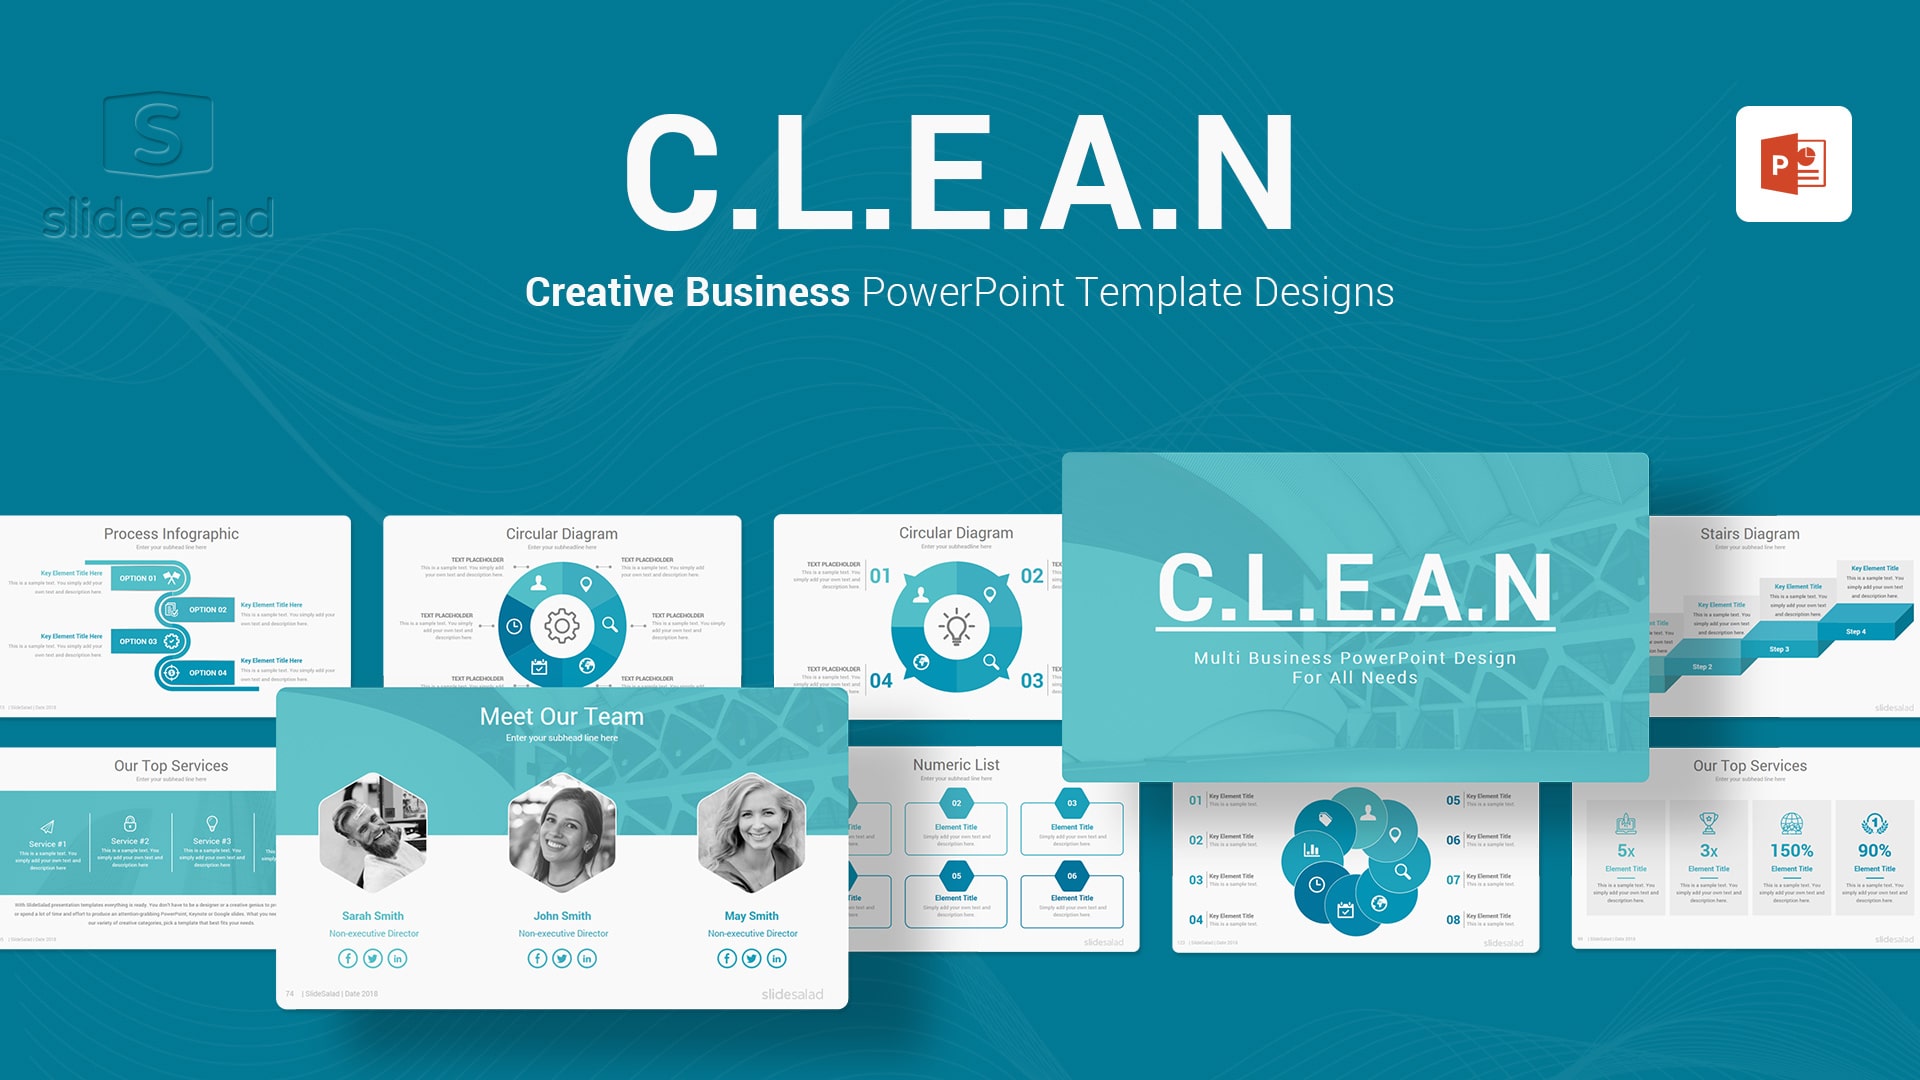 Clean Business PowerPoint Templates - Corporate Webinar PowerPoint Templates